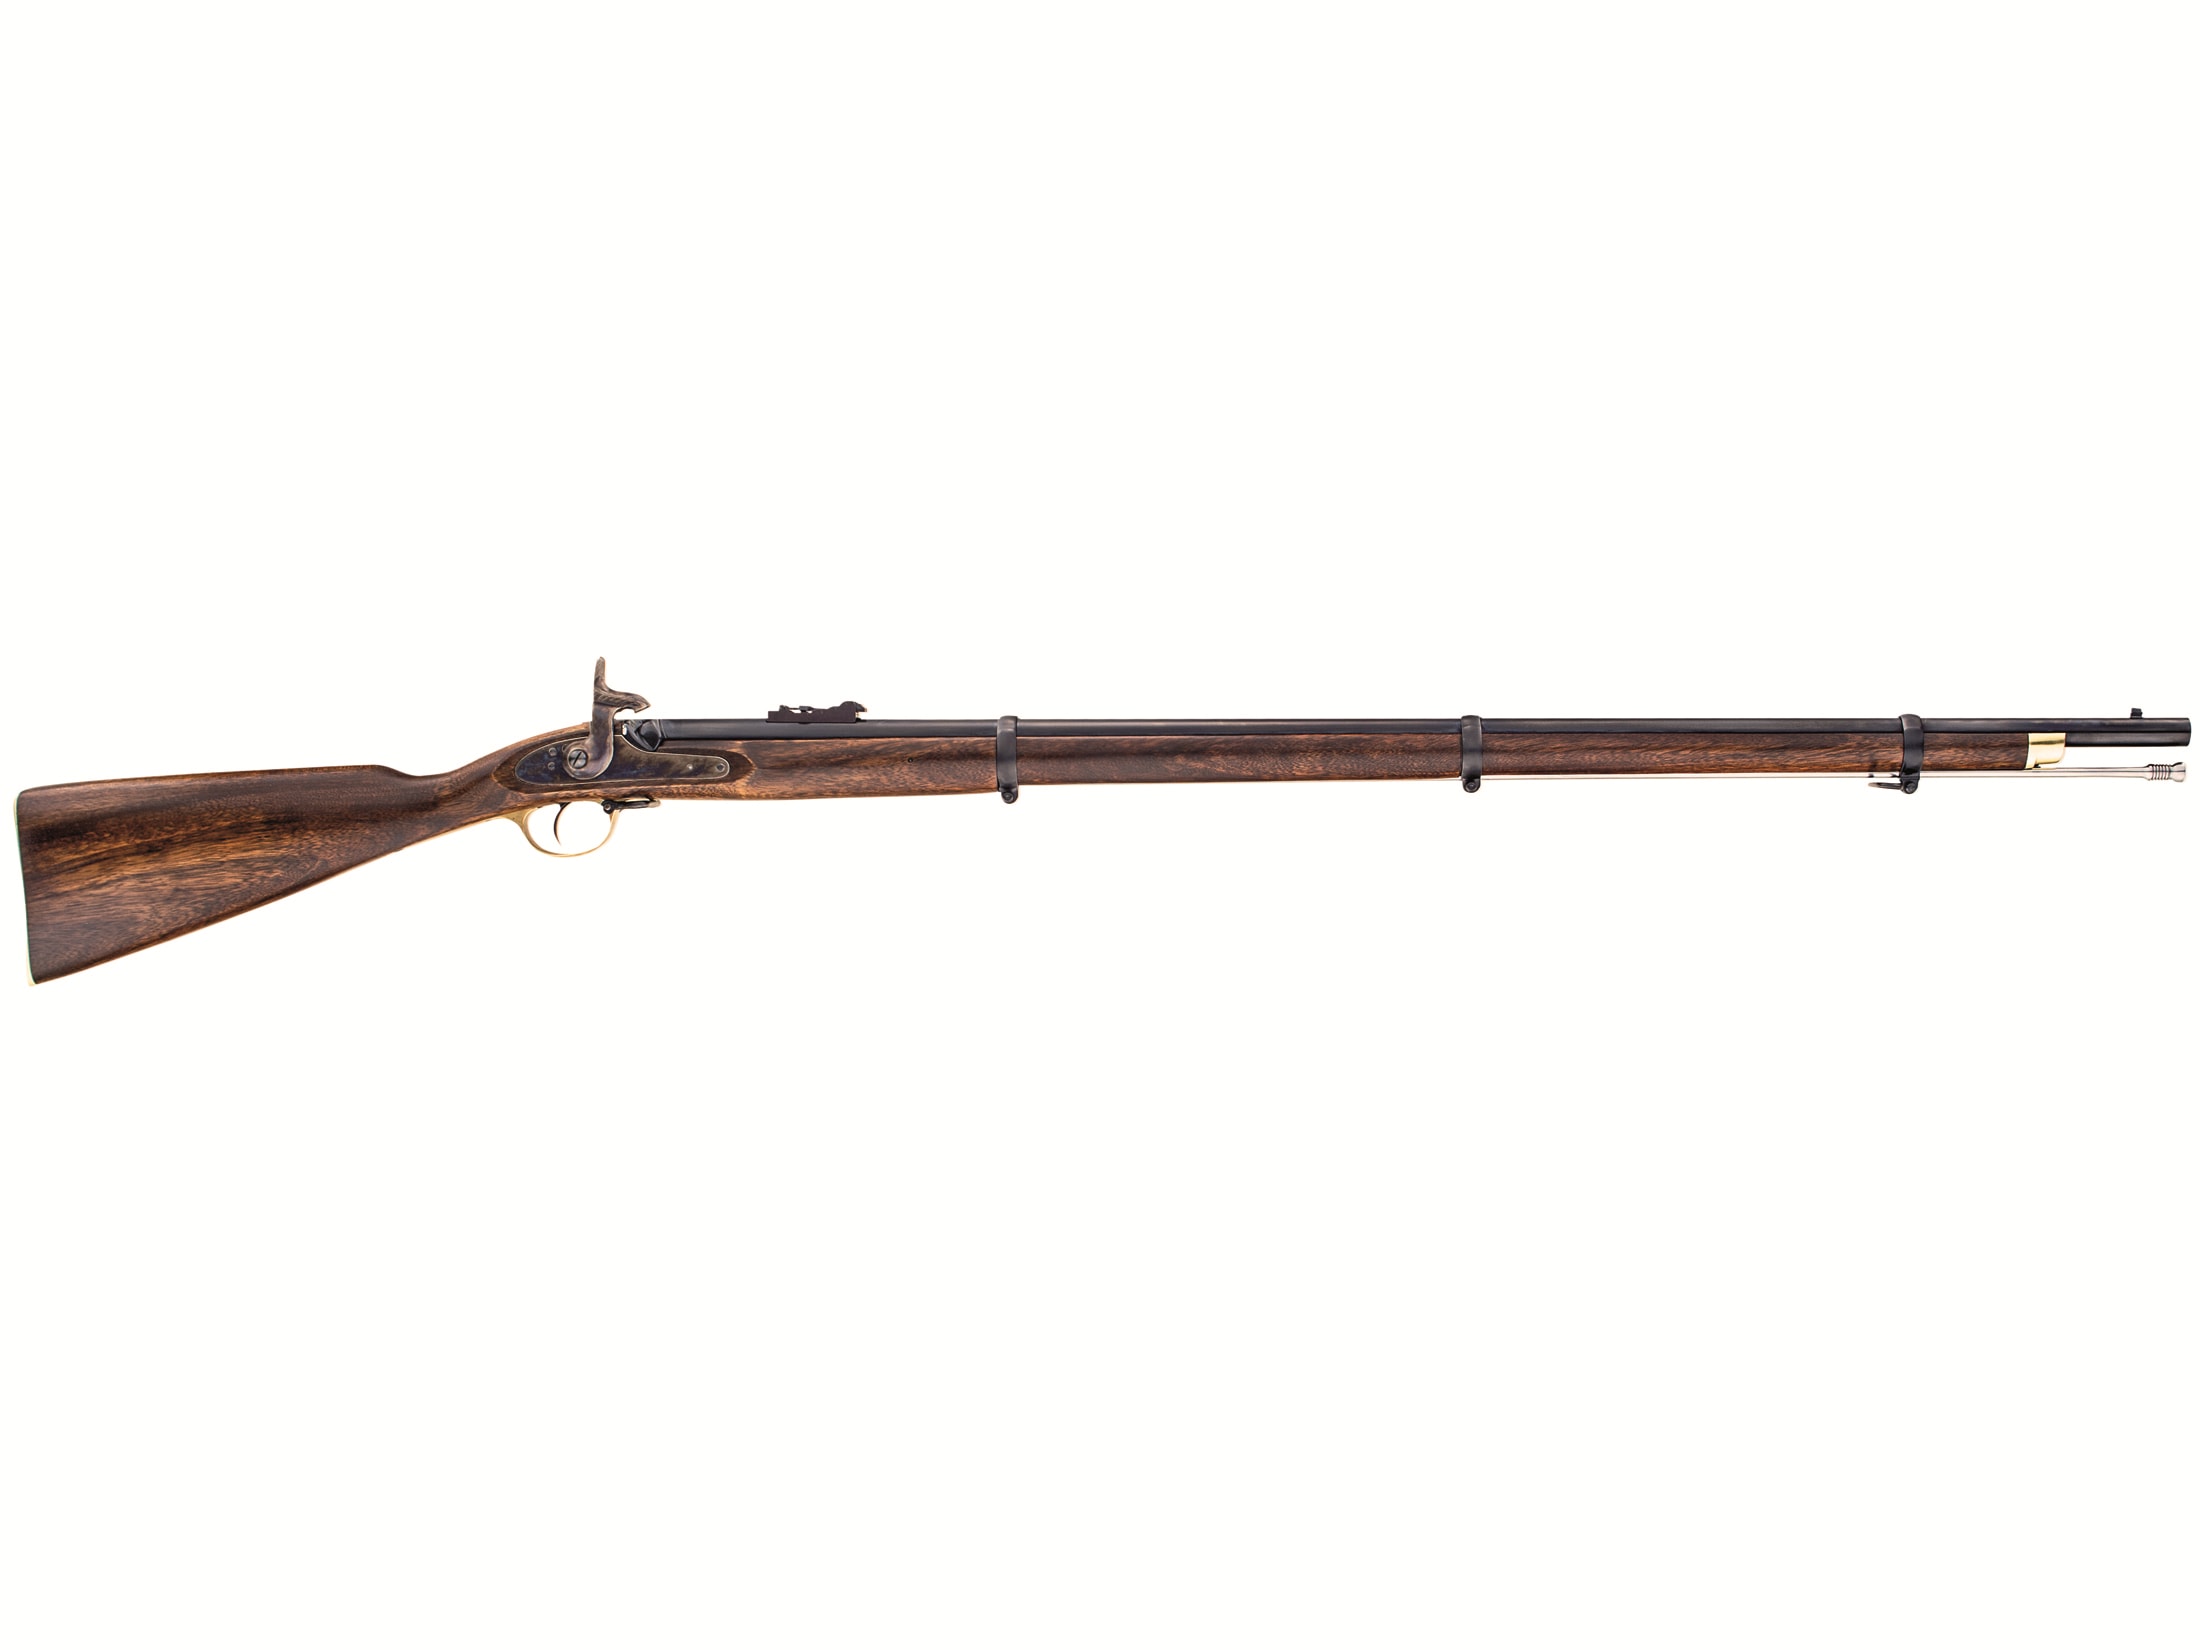 Image of Armi Sport 1853 3-Band Enfield Muzzleloading Rifle 58 Caliber Percussion Walnut Stock 39" 1 in 48" Twist Barrel Blue